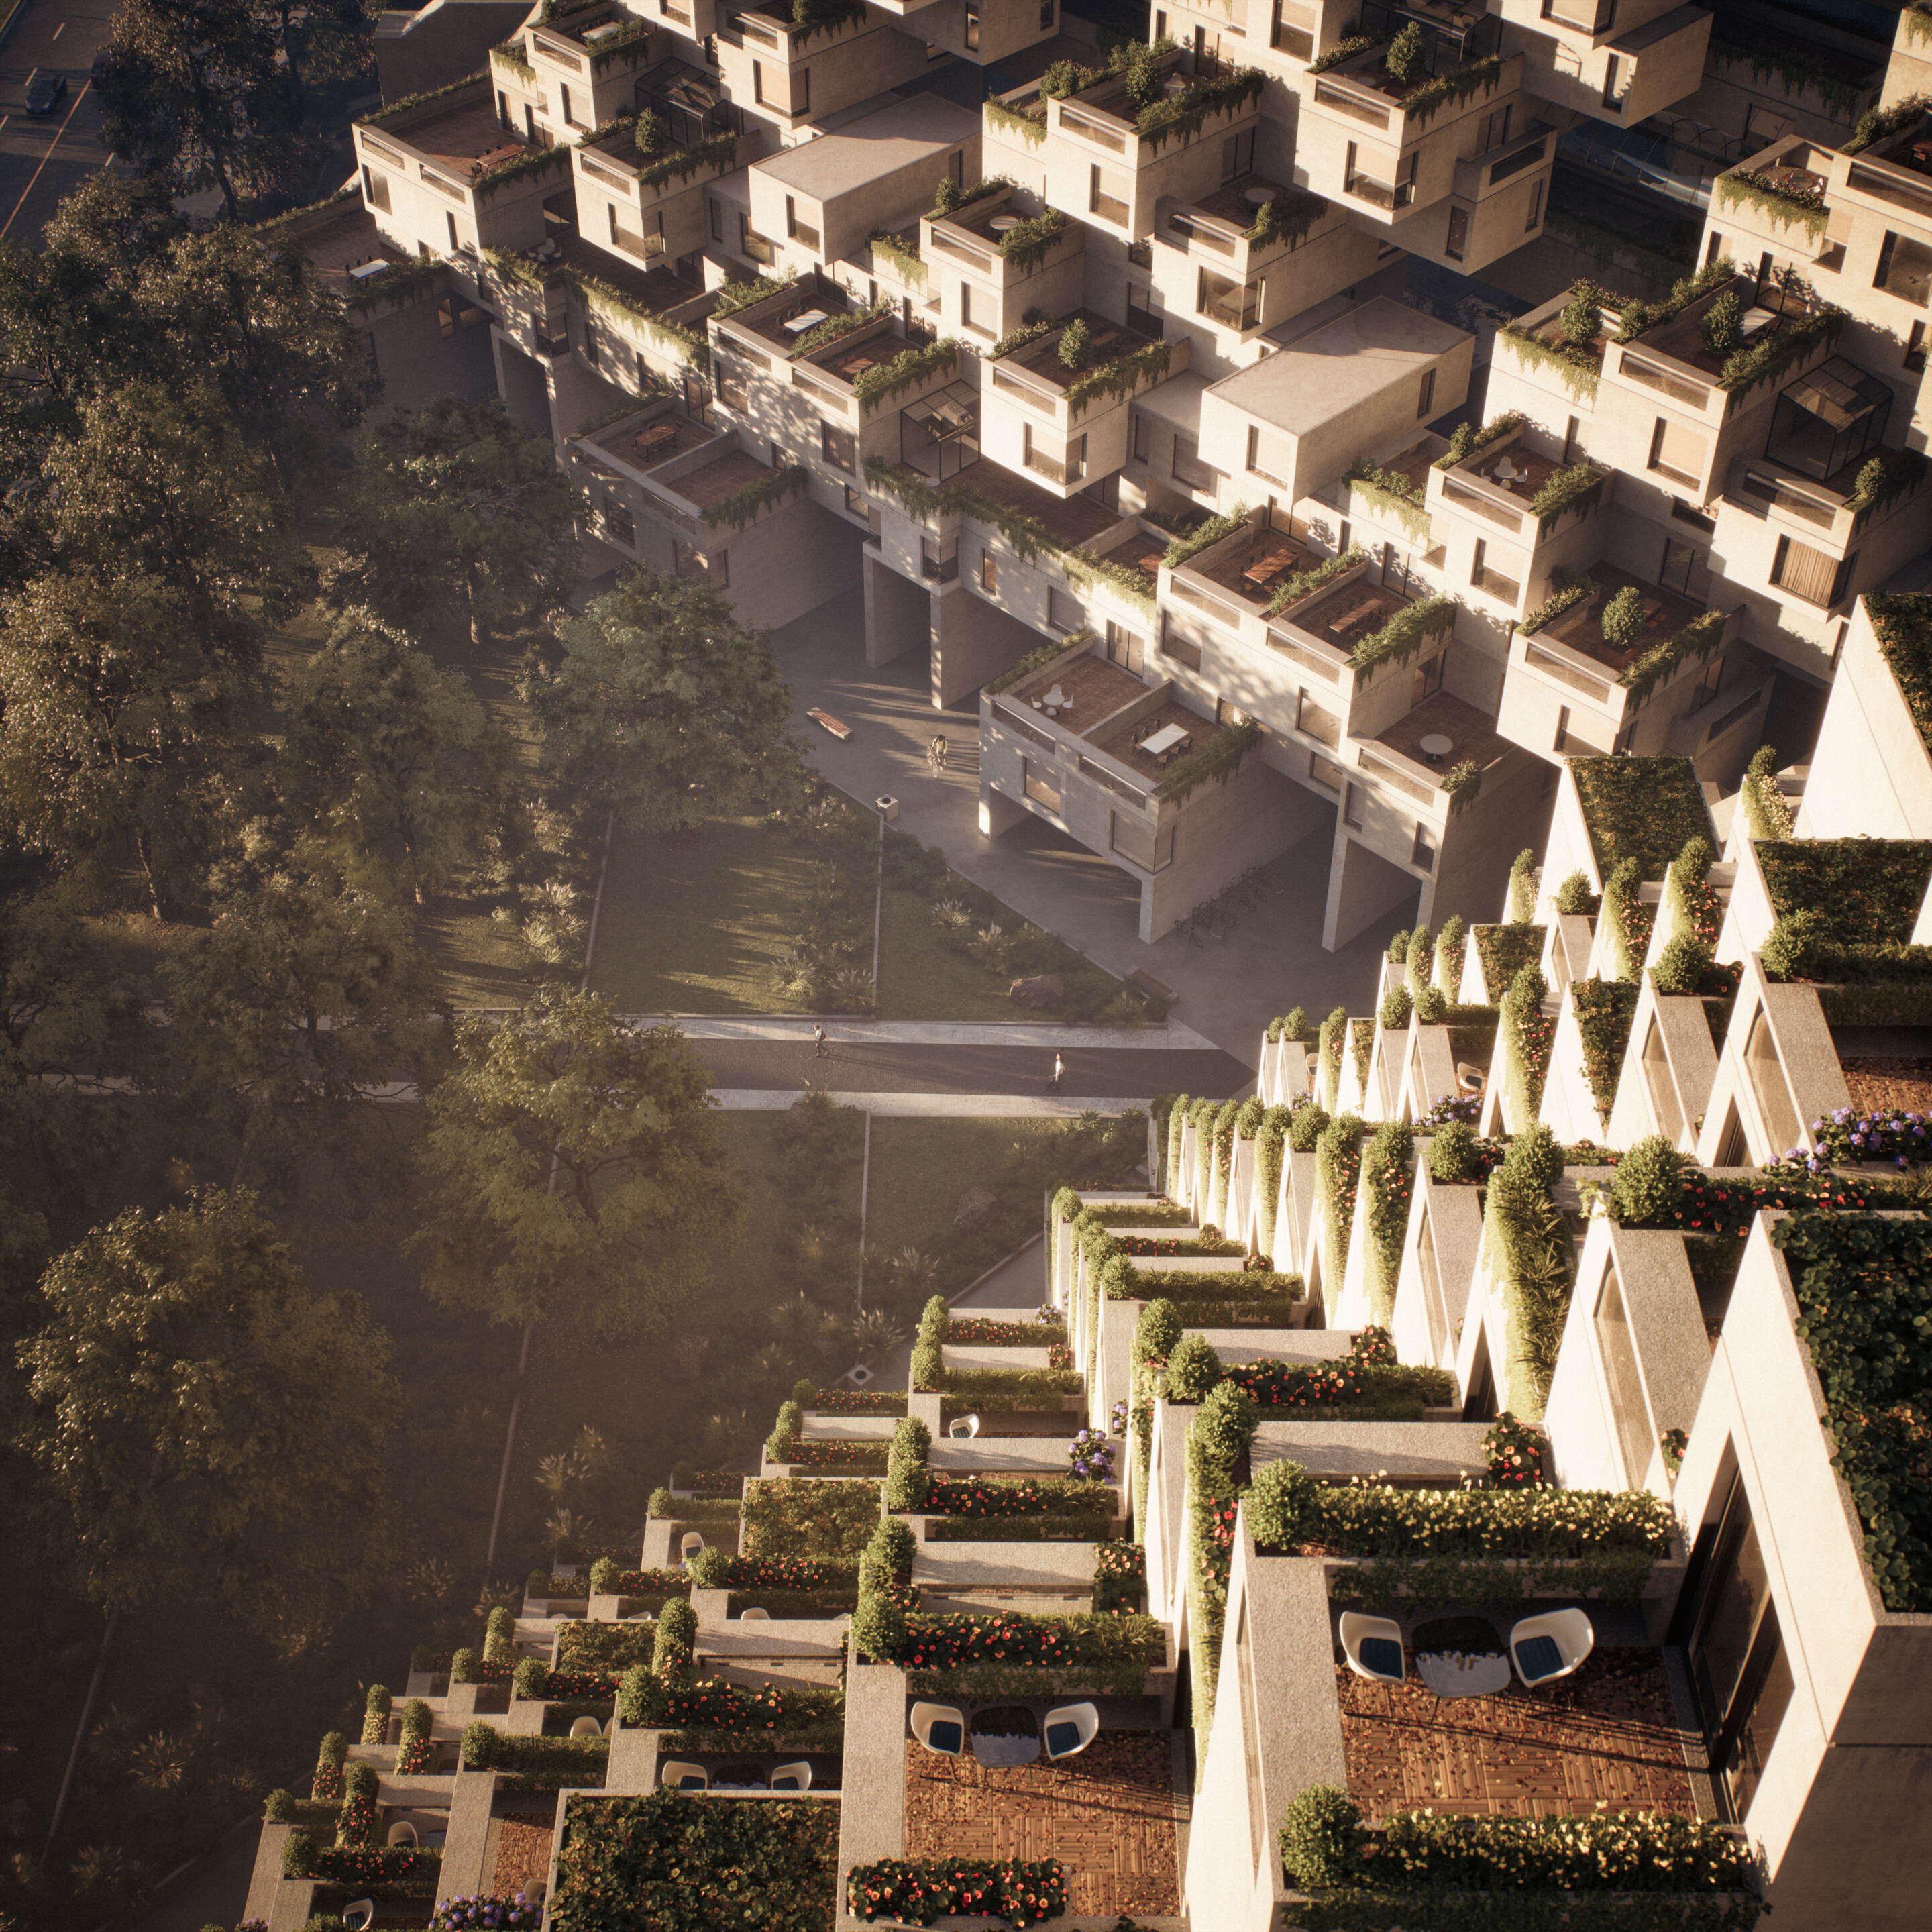 Safdie Architects and Neoscape unveil digital model of Habitat 67